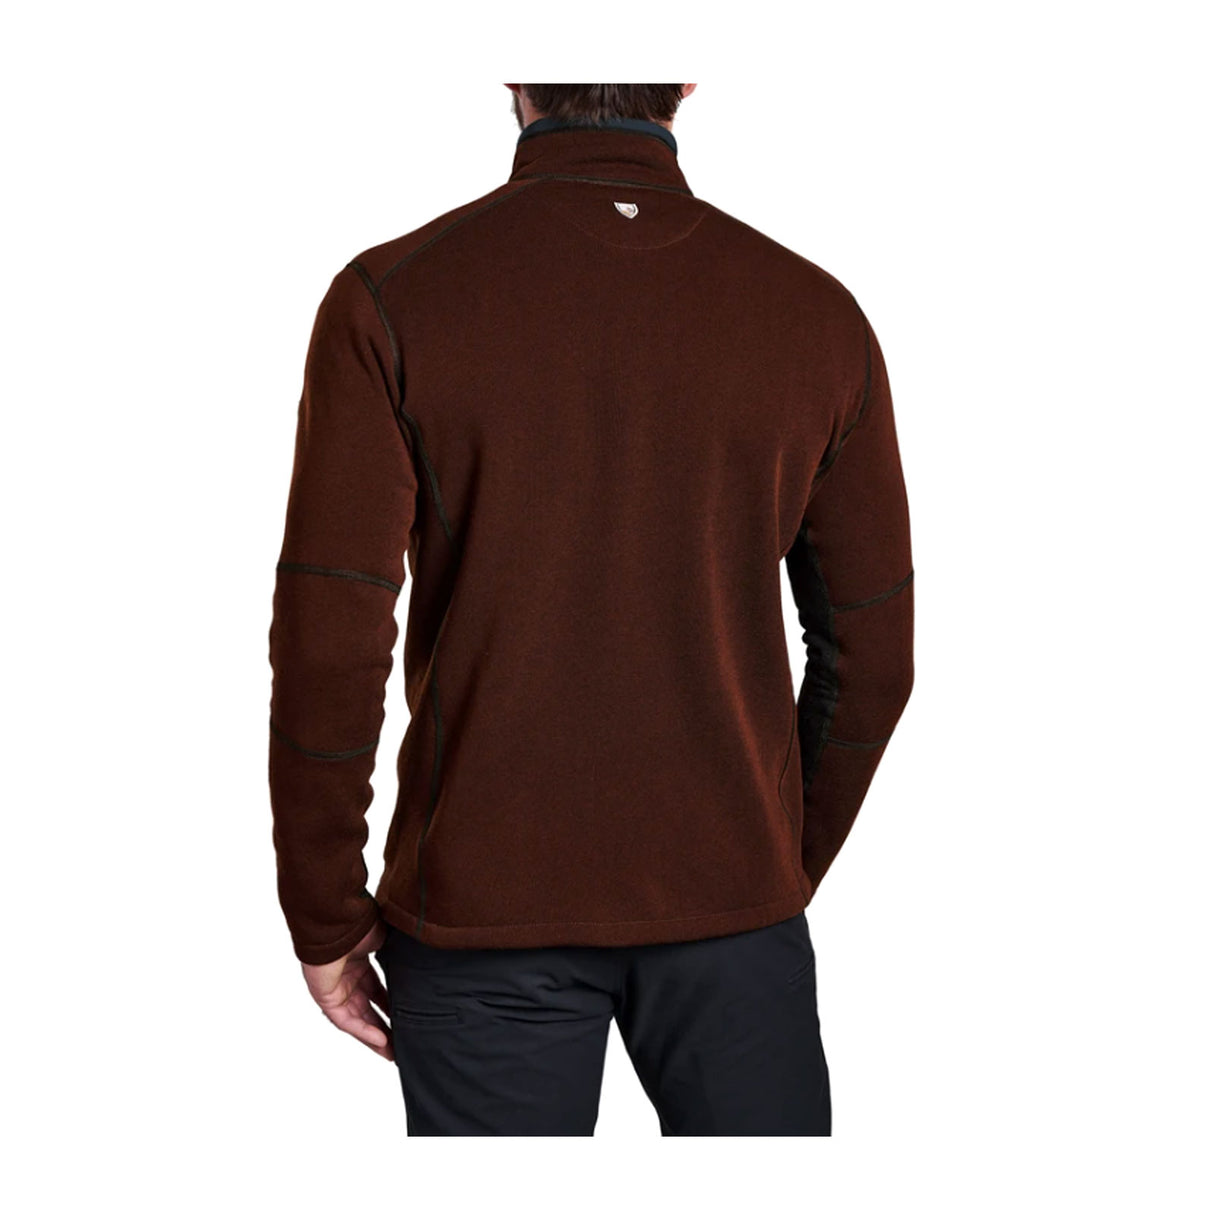 Kuhl Revel 1/4 Zip Sweater (Men) - Mole/Charcoal Apparel - Top - Long Sleeve - The Heel Shoe Fitters